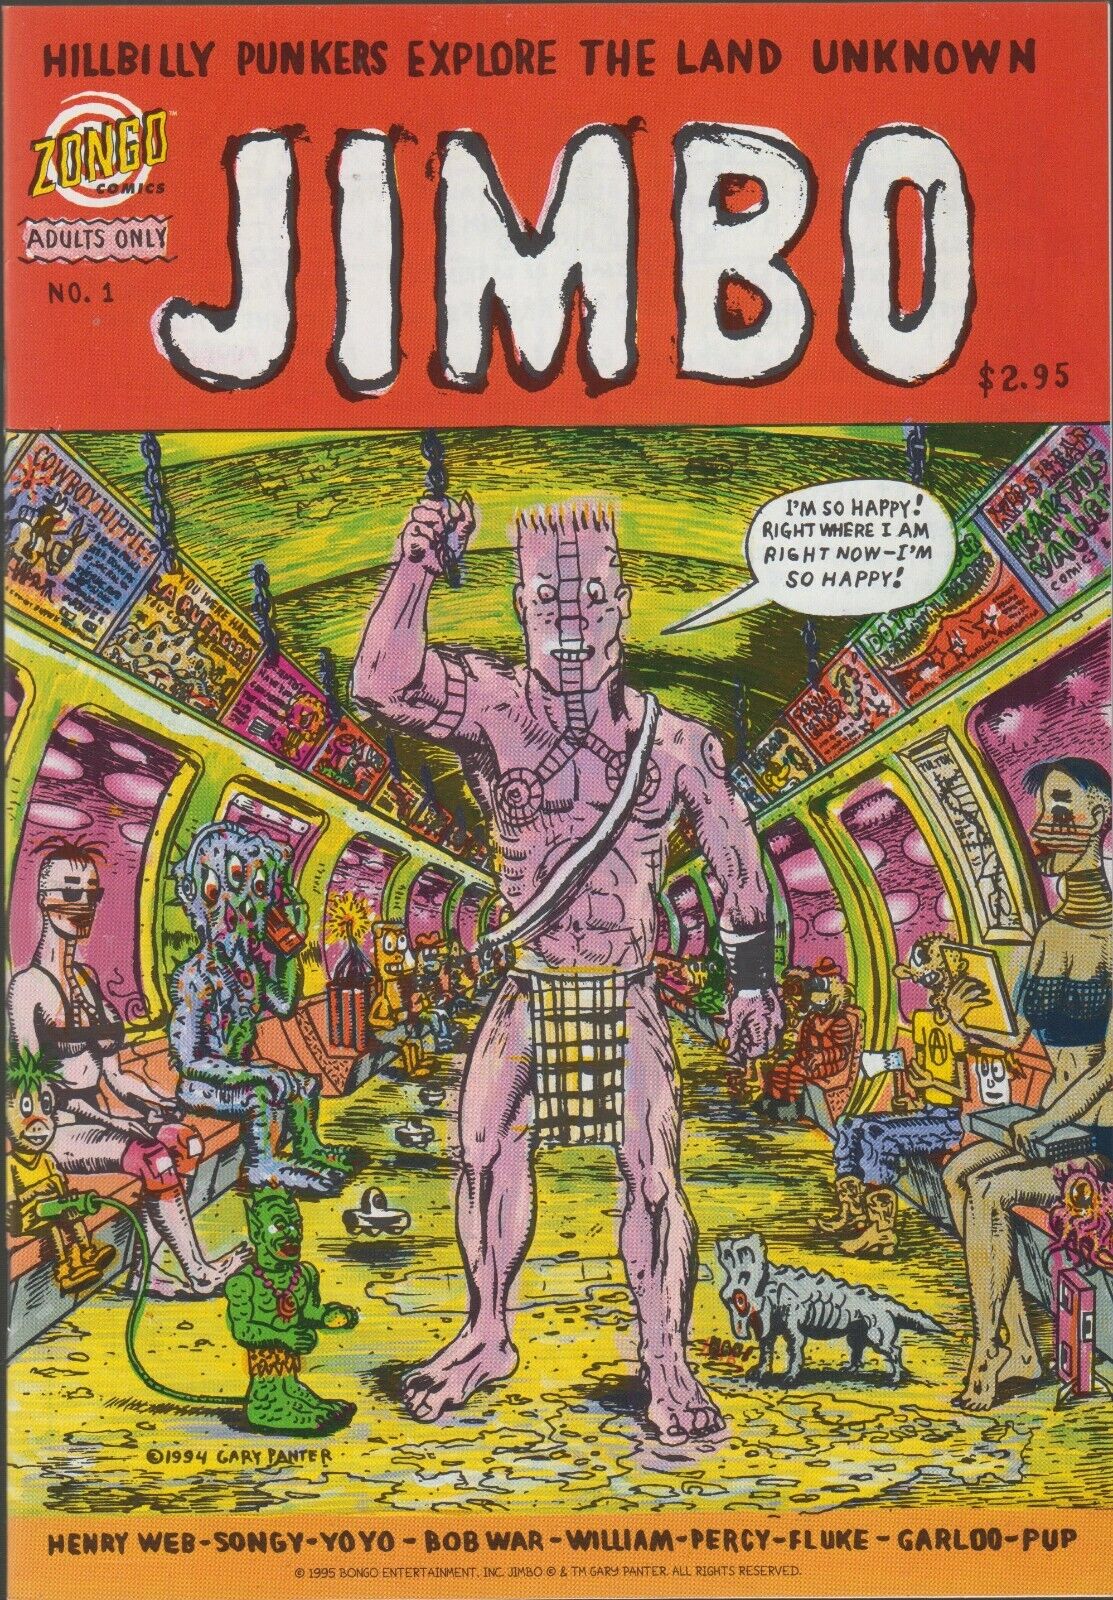 Jimbo (1995 ZONGO)  - 1  - lowbrow underground comic